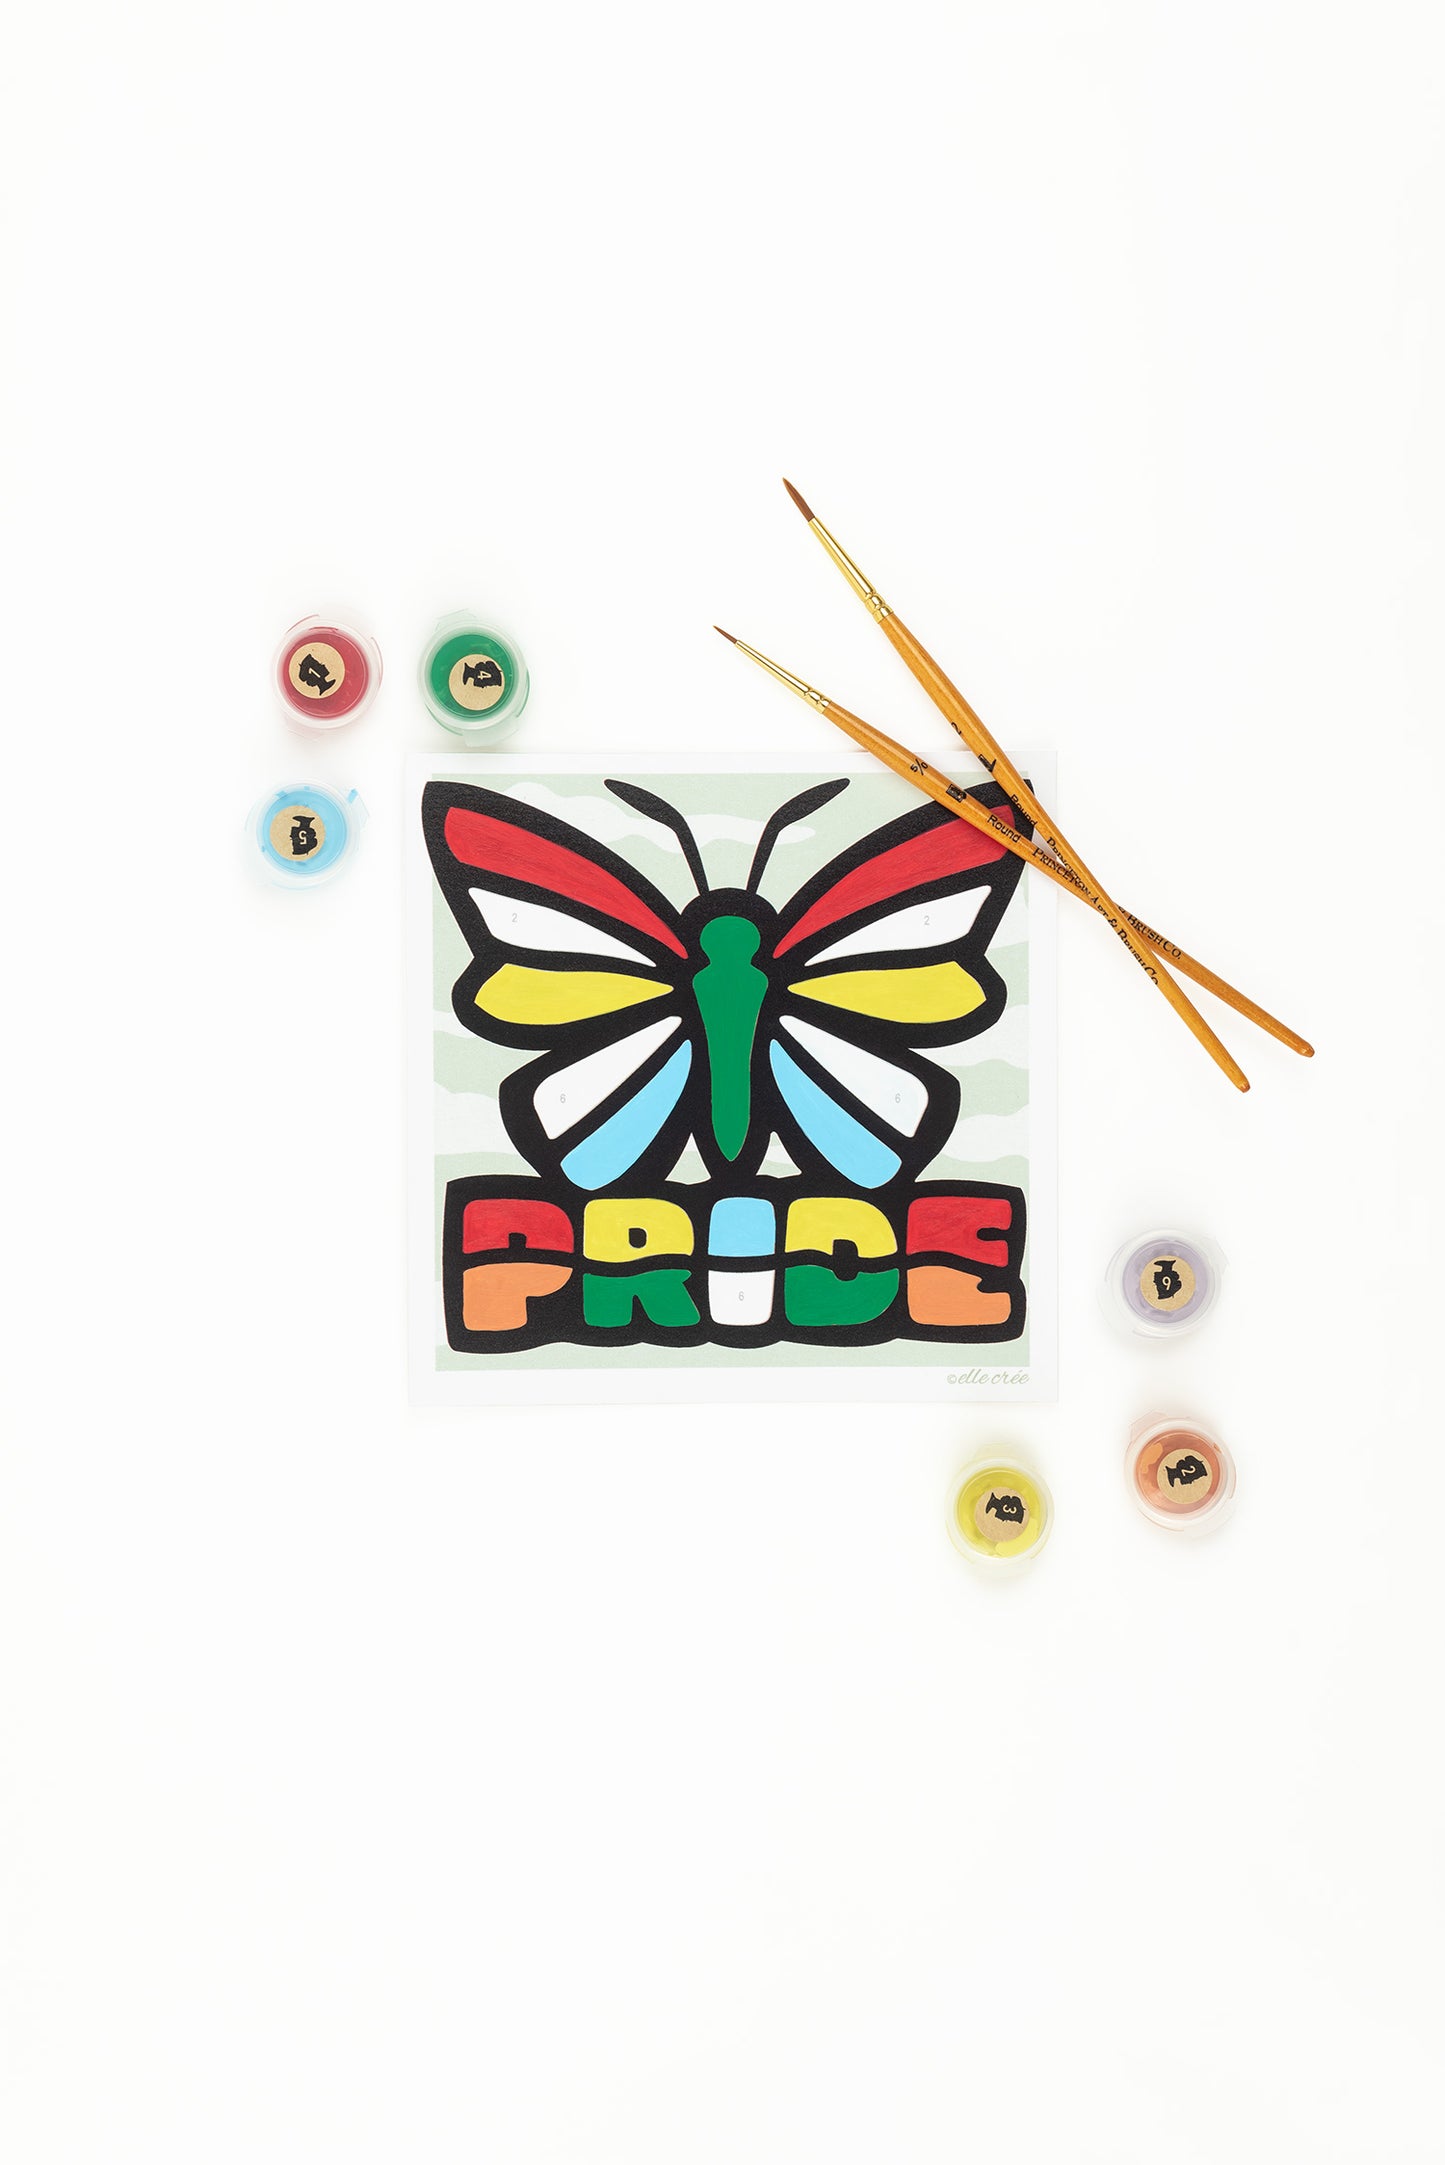 Kids Pride Butterfly | 6x6 mini paint-by-number kit - Elle Crée